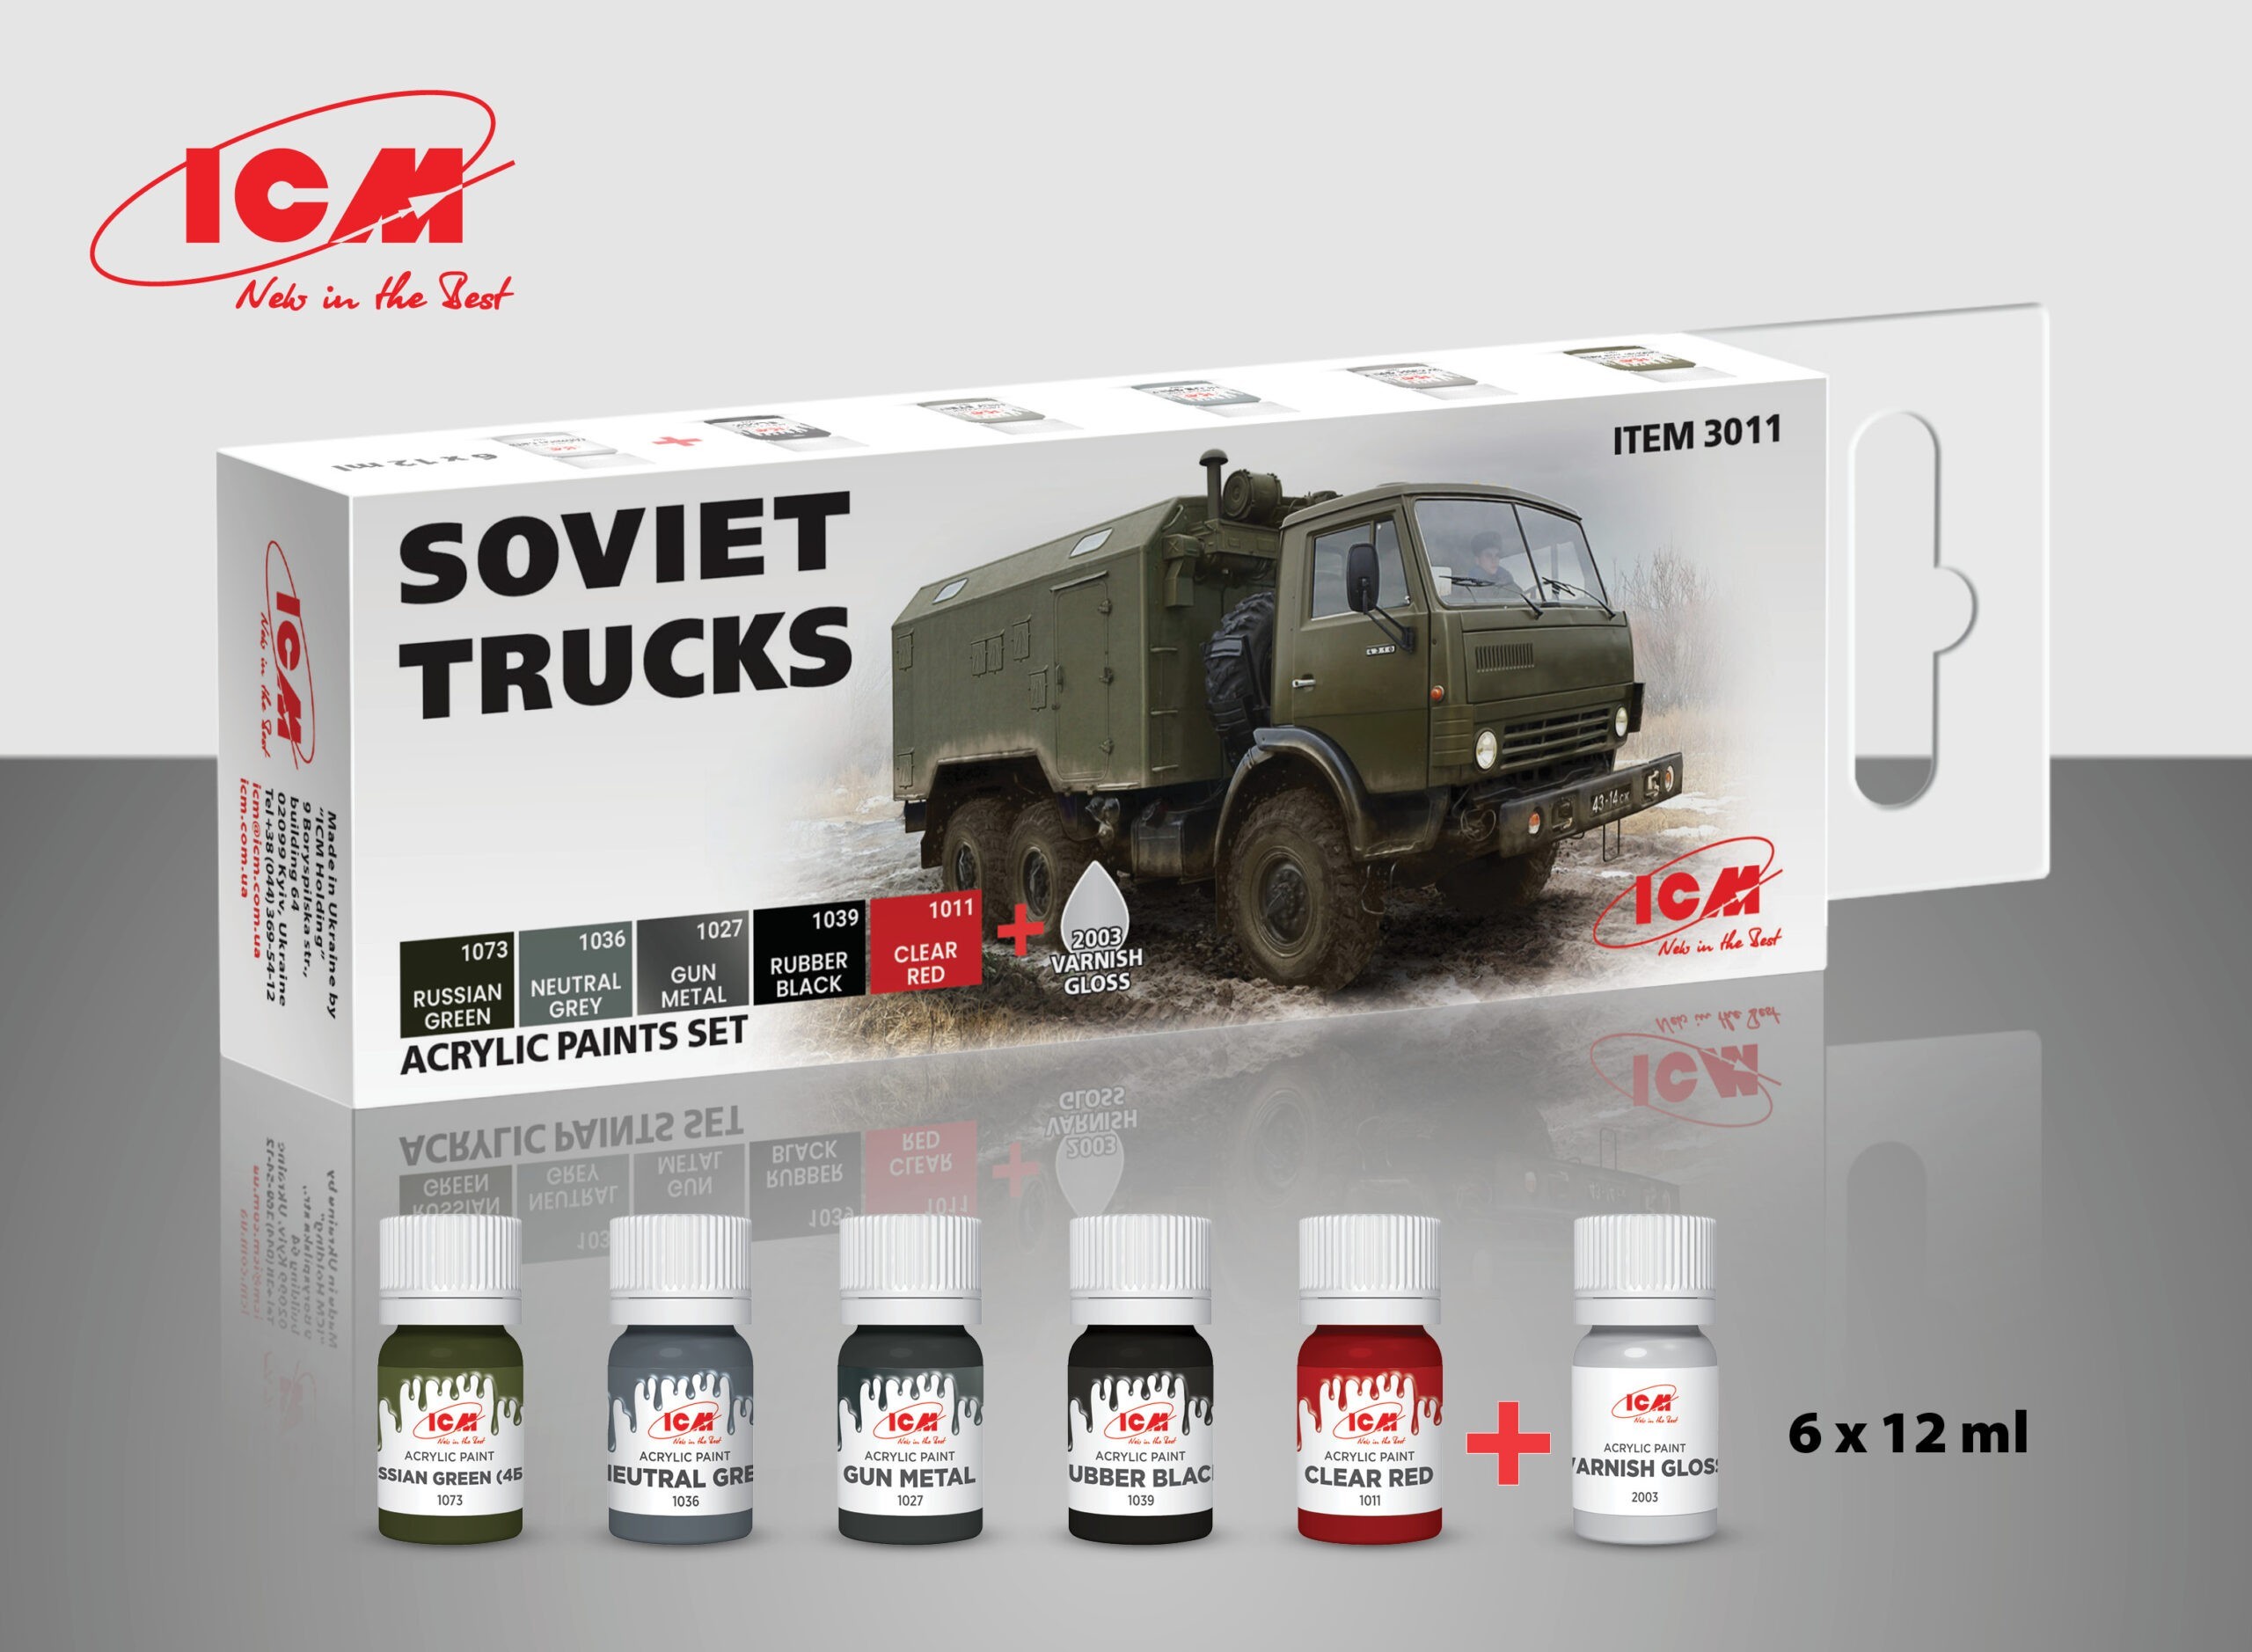 # 3011 Acrylic paint set for Soviet trucks